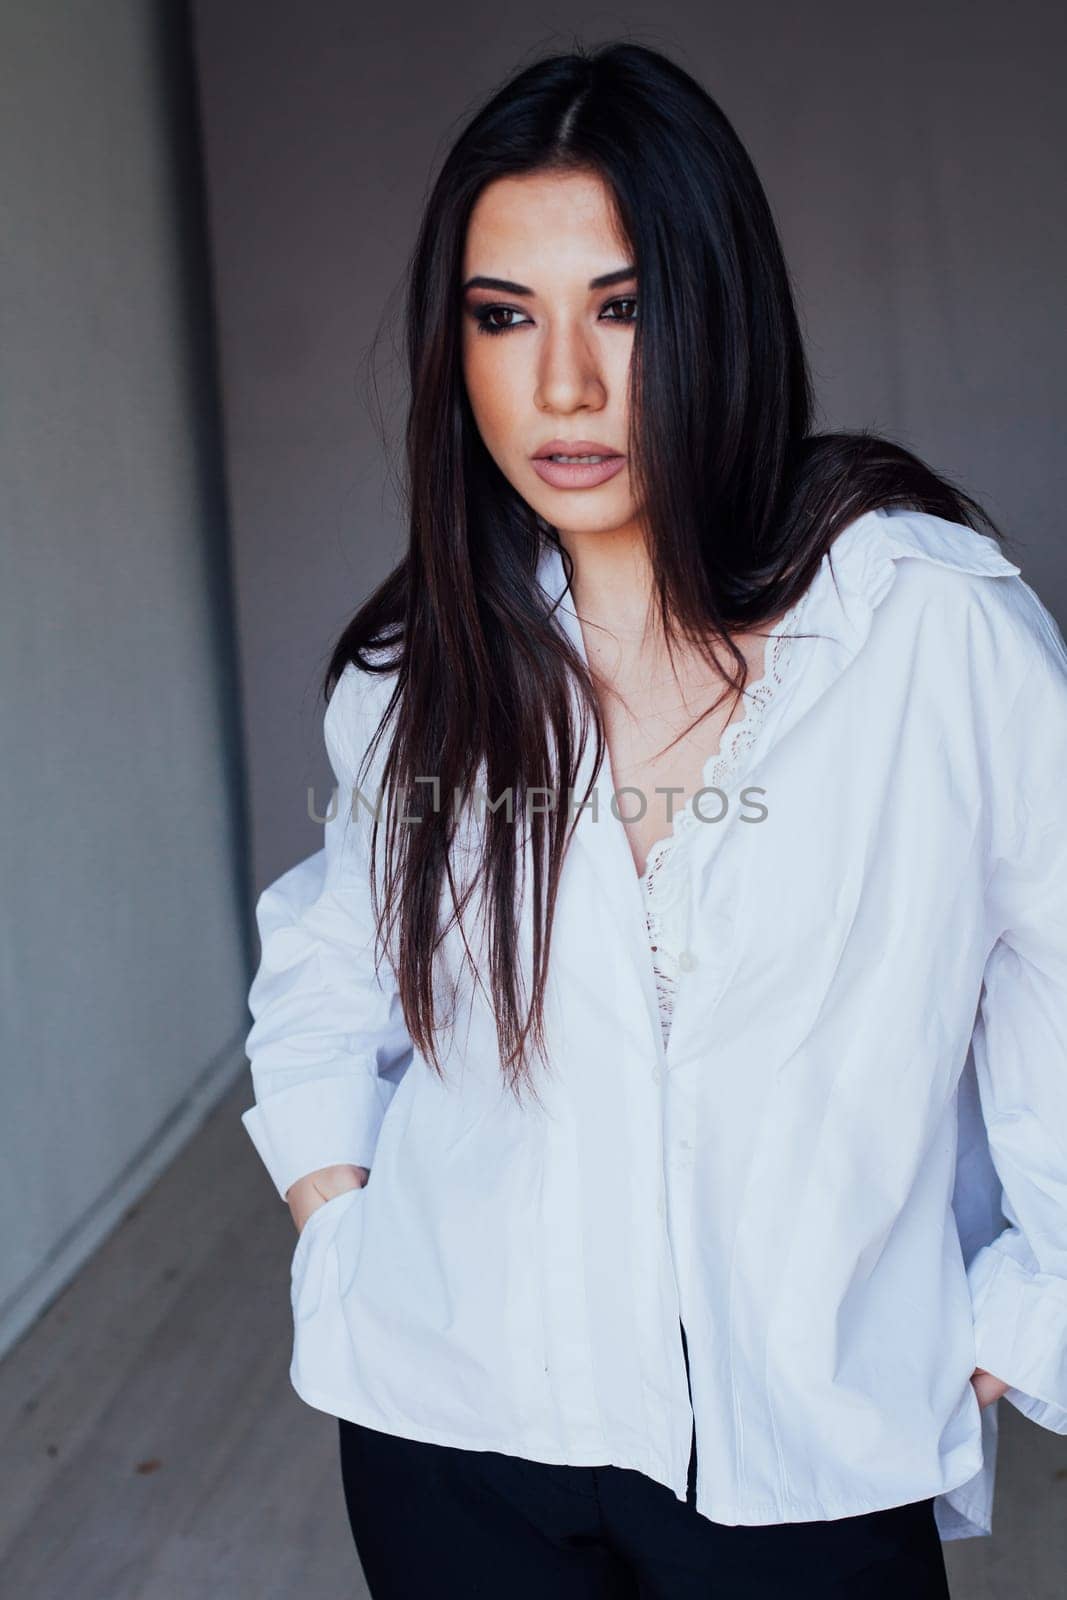 disheveled brunette woman in white portrait shirt by Simakov